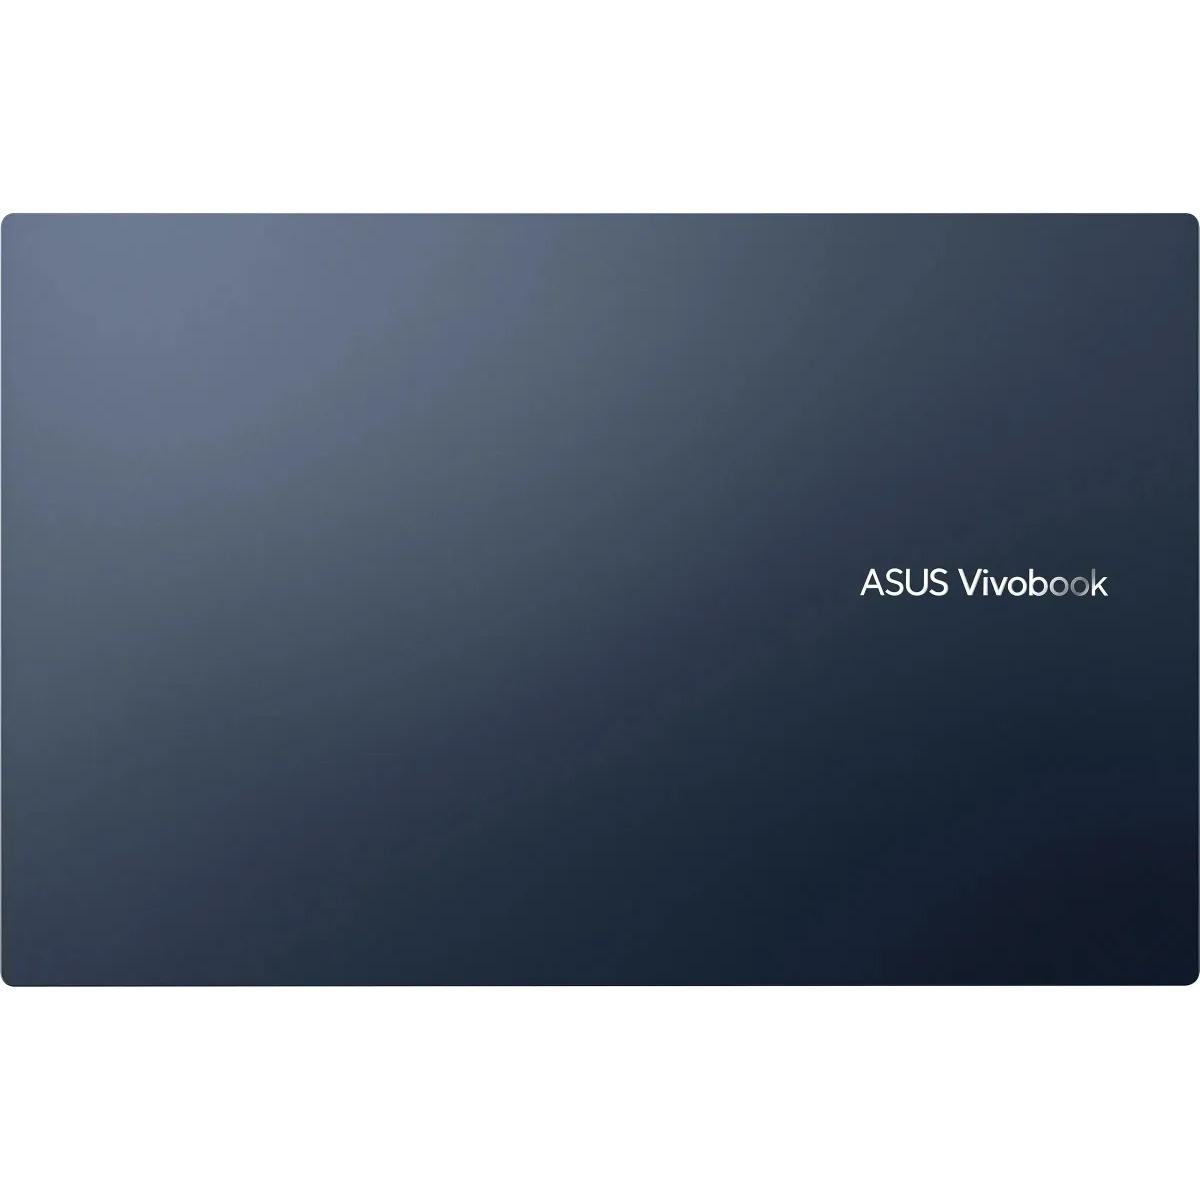 Asus vivobook 15 bq165